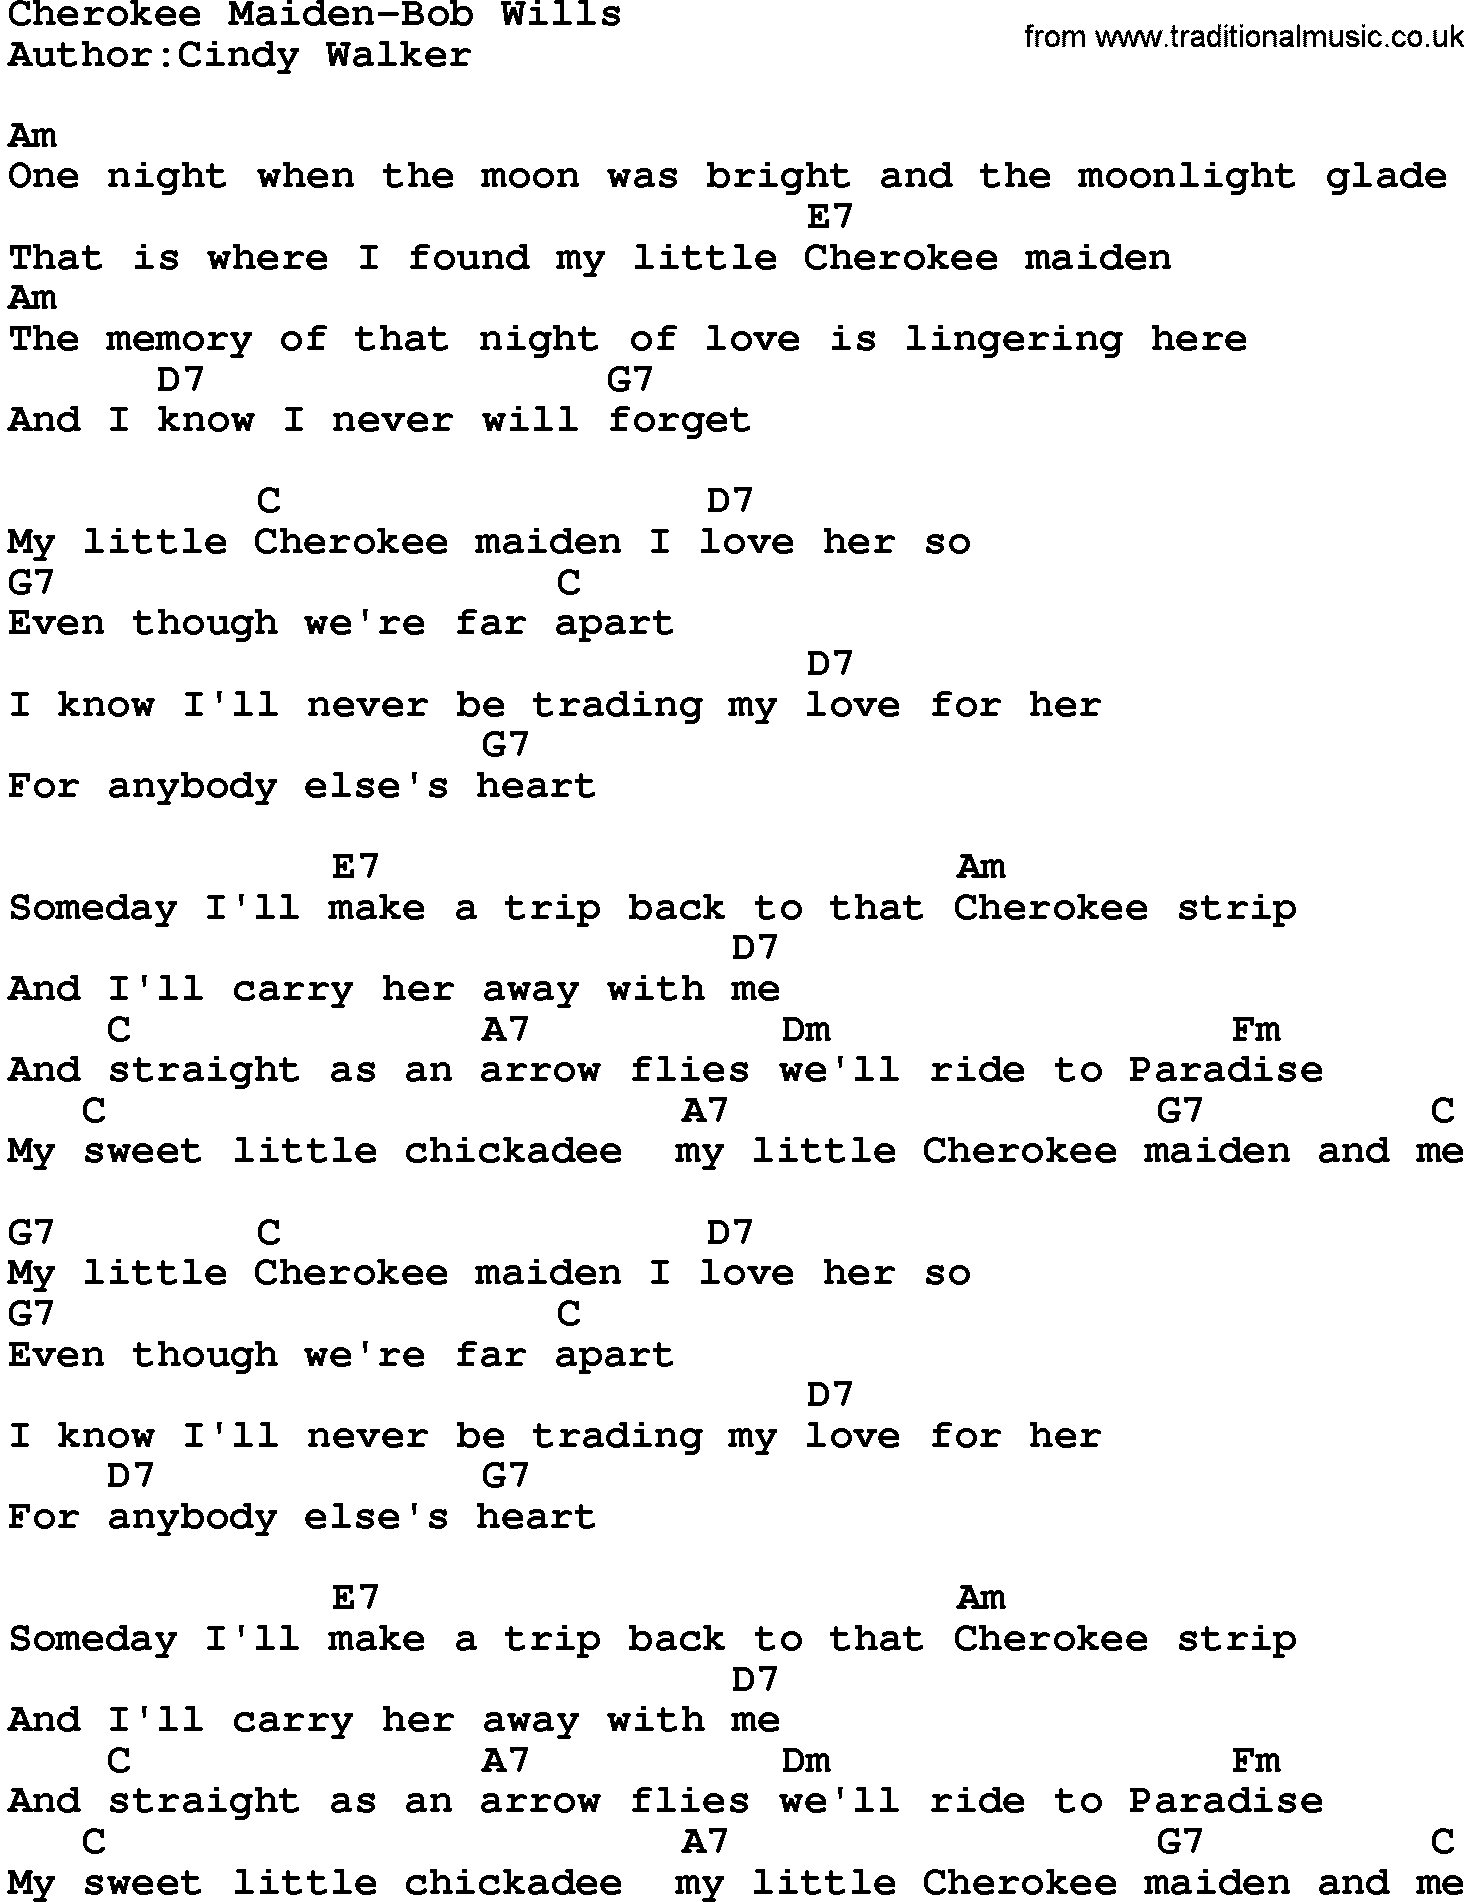 Country music song: Cherokee Maiden-Bob Wills lyrics and chords